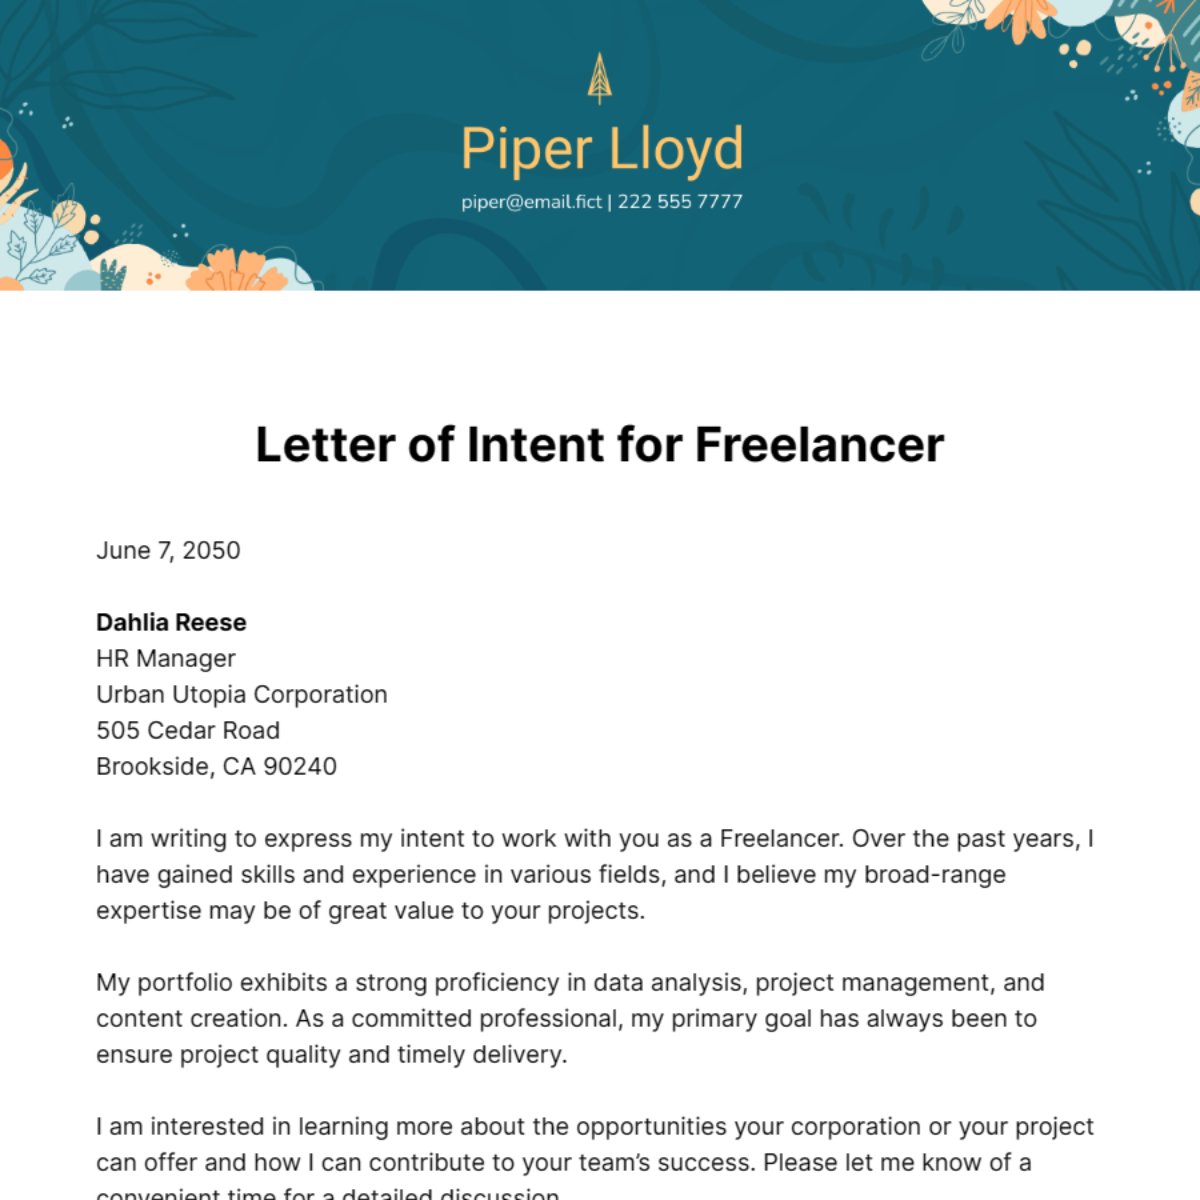 Letter of Intent for Freelancer Template